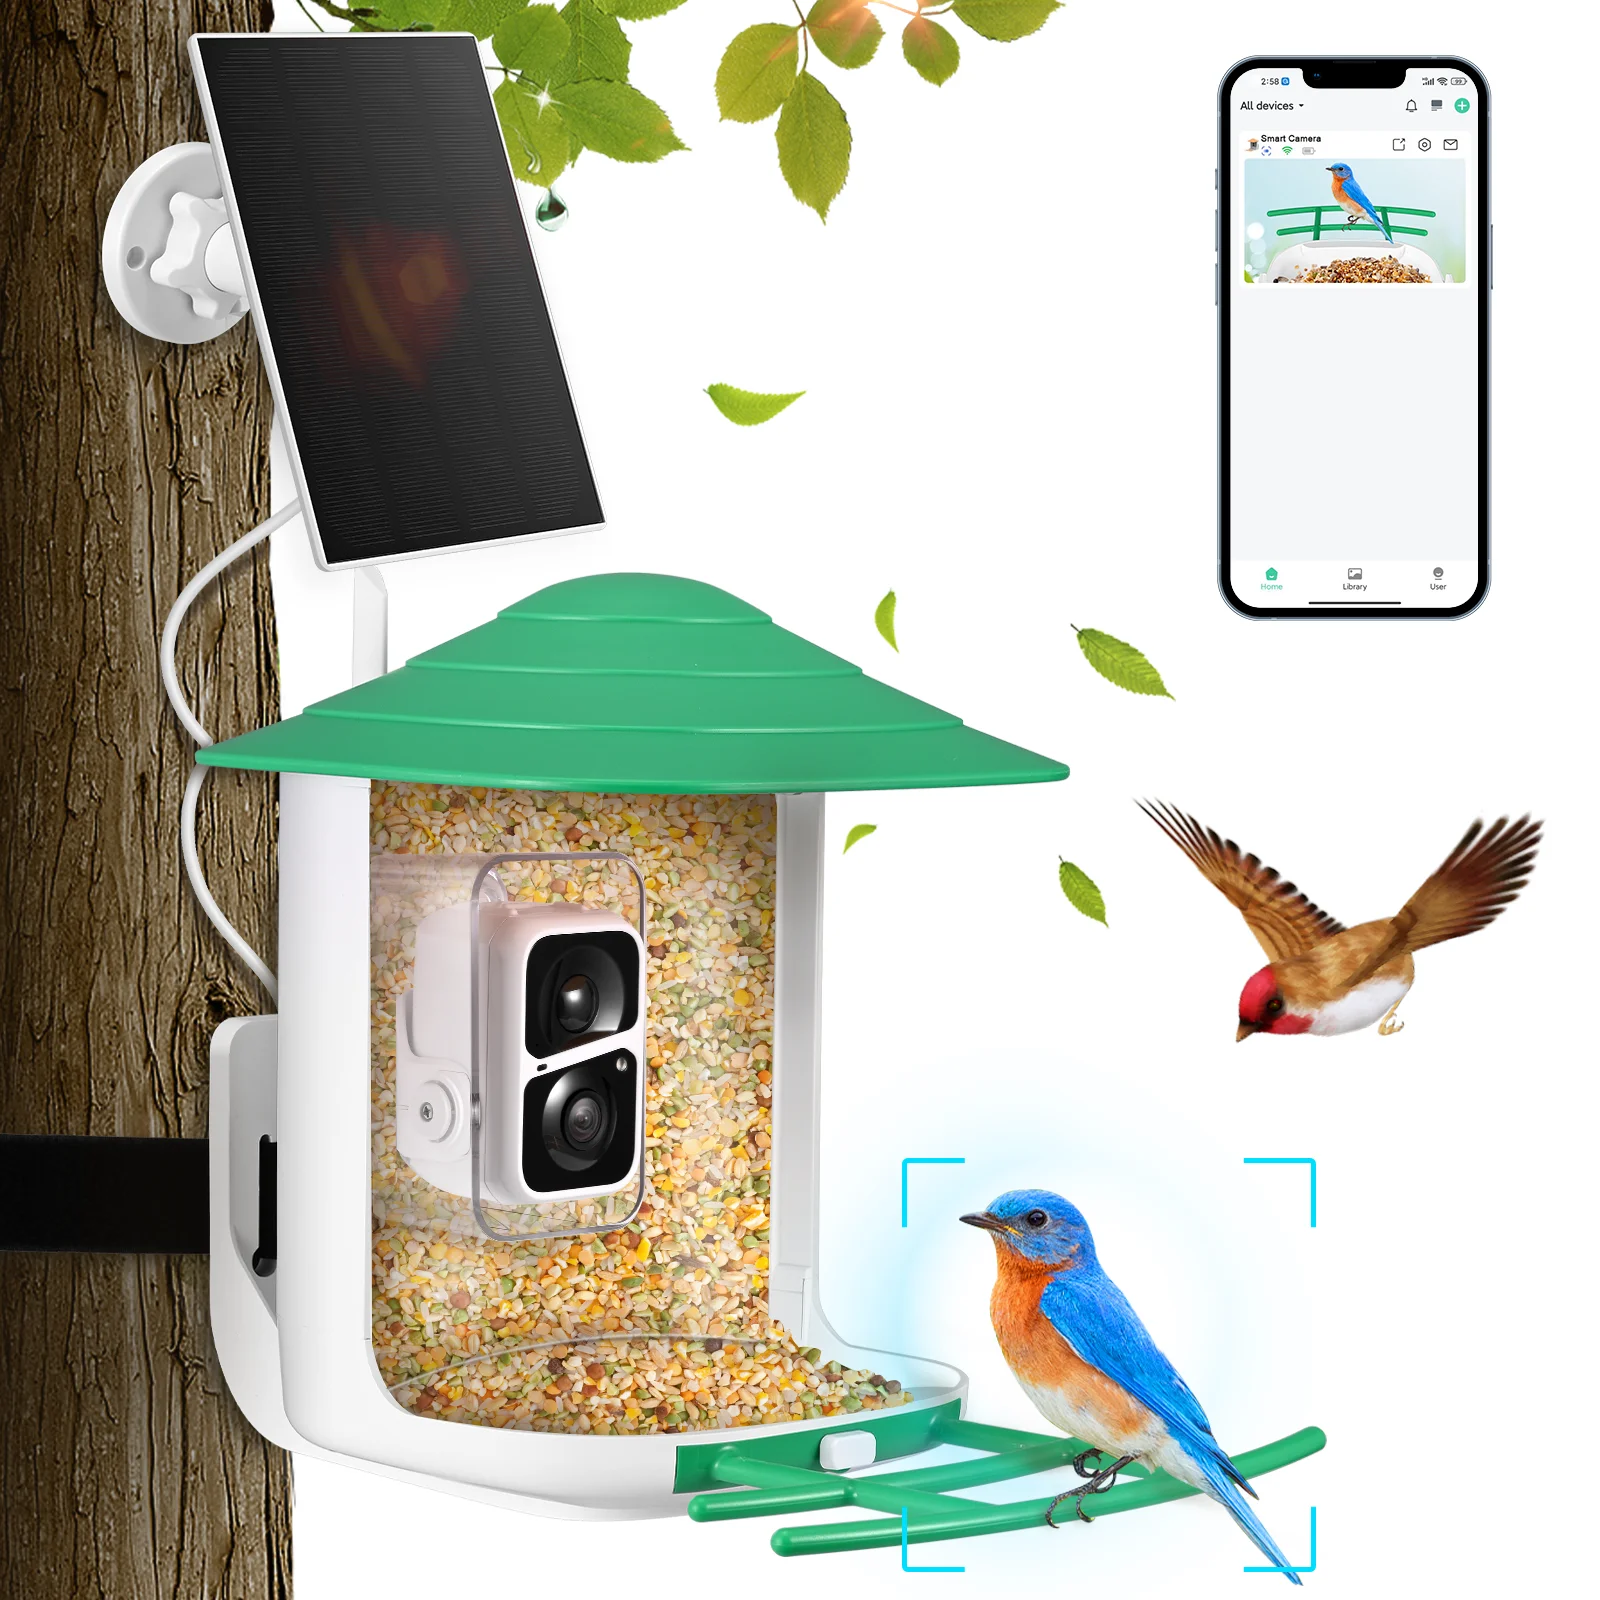 

Smart Bird Feeder Camera,1080P HD Camera Auto Capture Bird Videos & Solar Panel, App Notify When Birds Detected